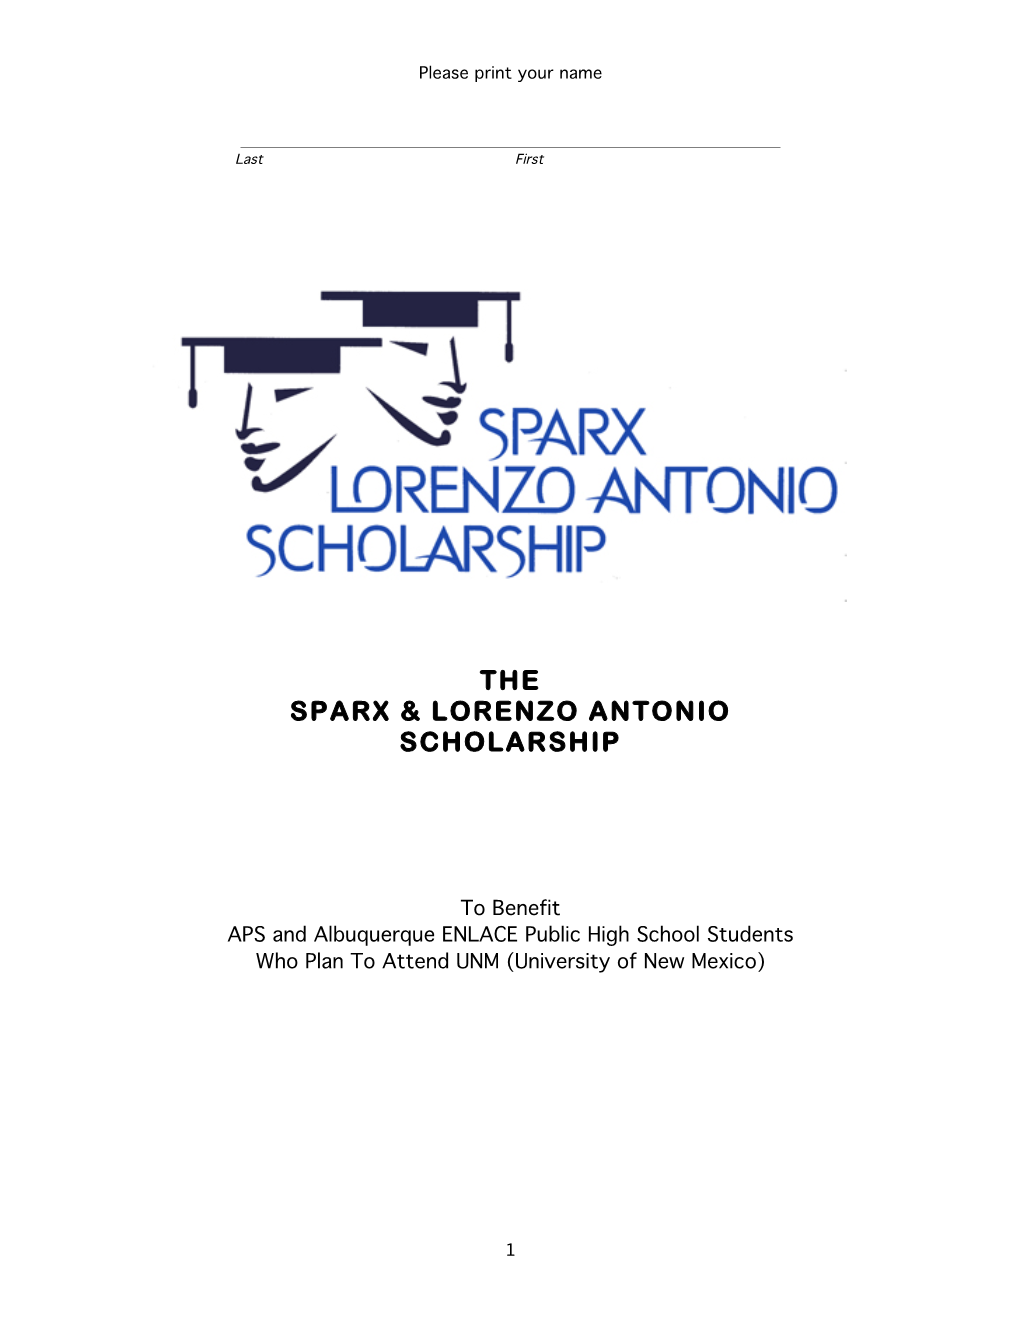 The Sparx & Lorenzo Antonio Scholarship